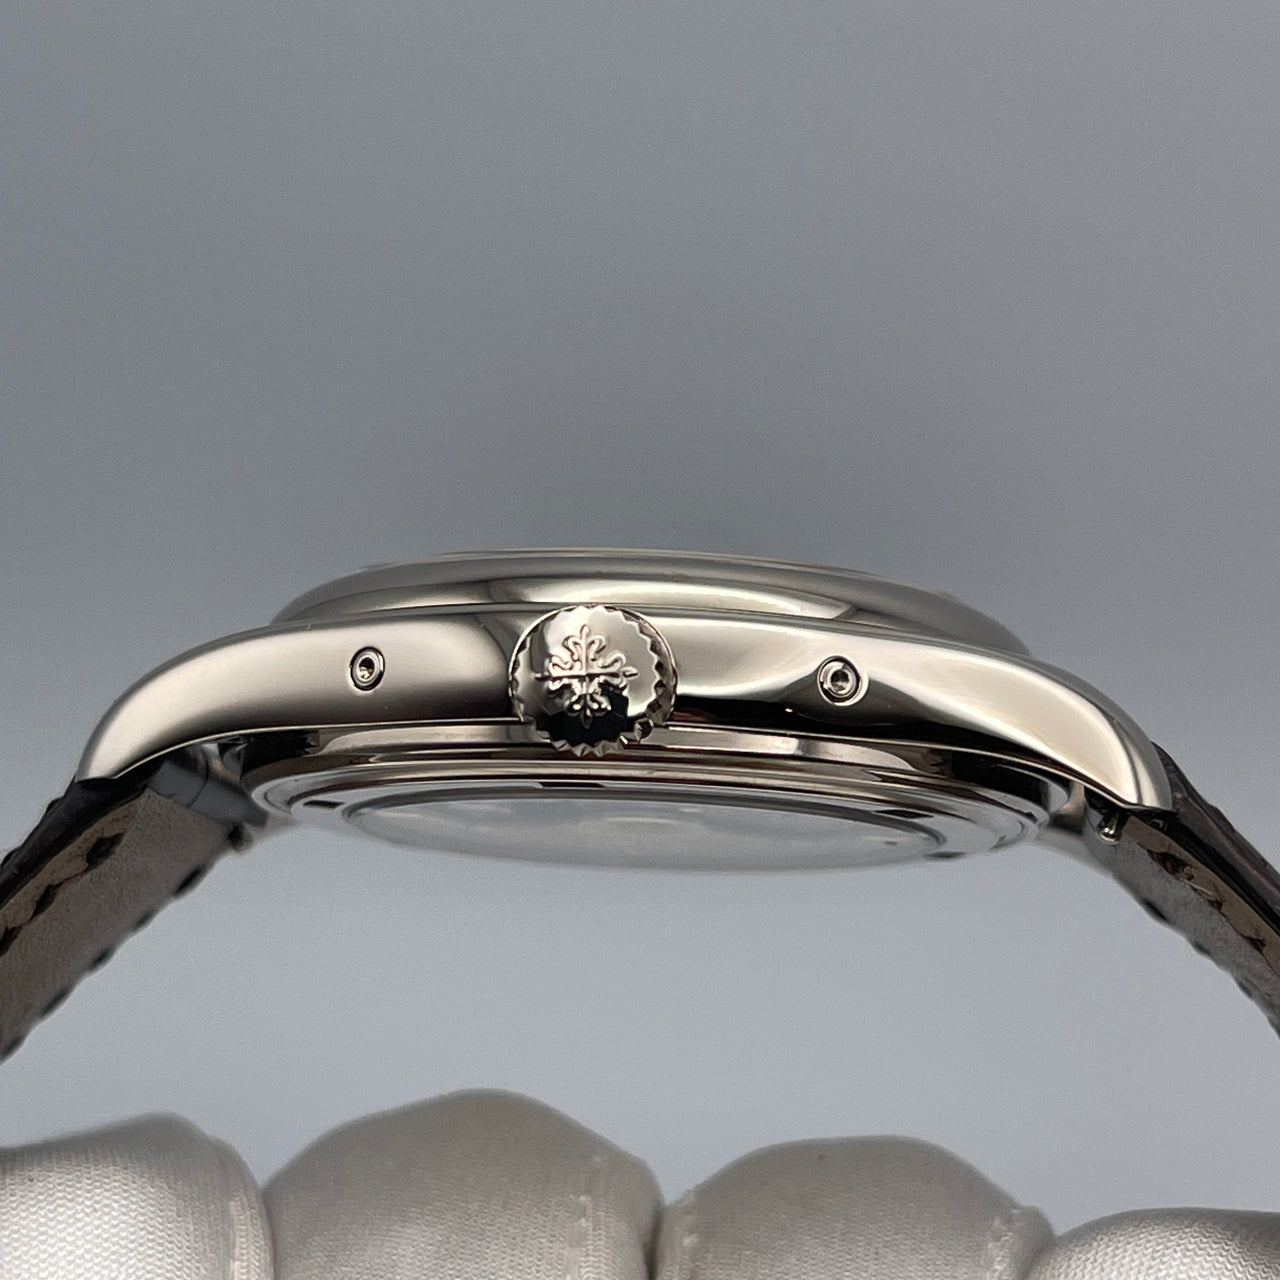 Luxury Watch Patek Philippe Complications Moon Phases Annual Calendar 5146G-001 Wrist Aficionado